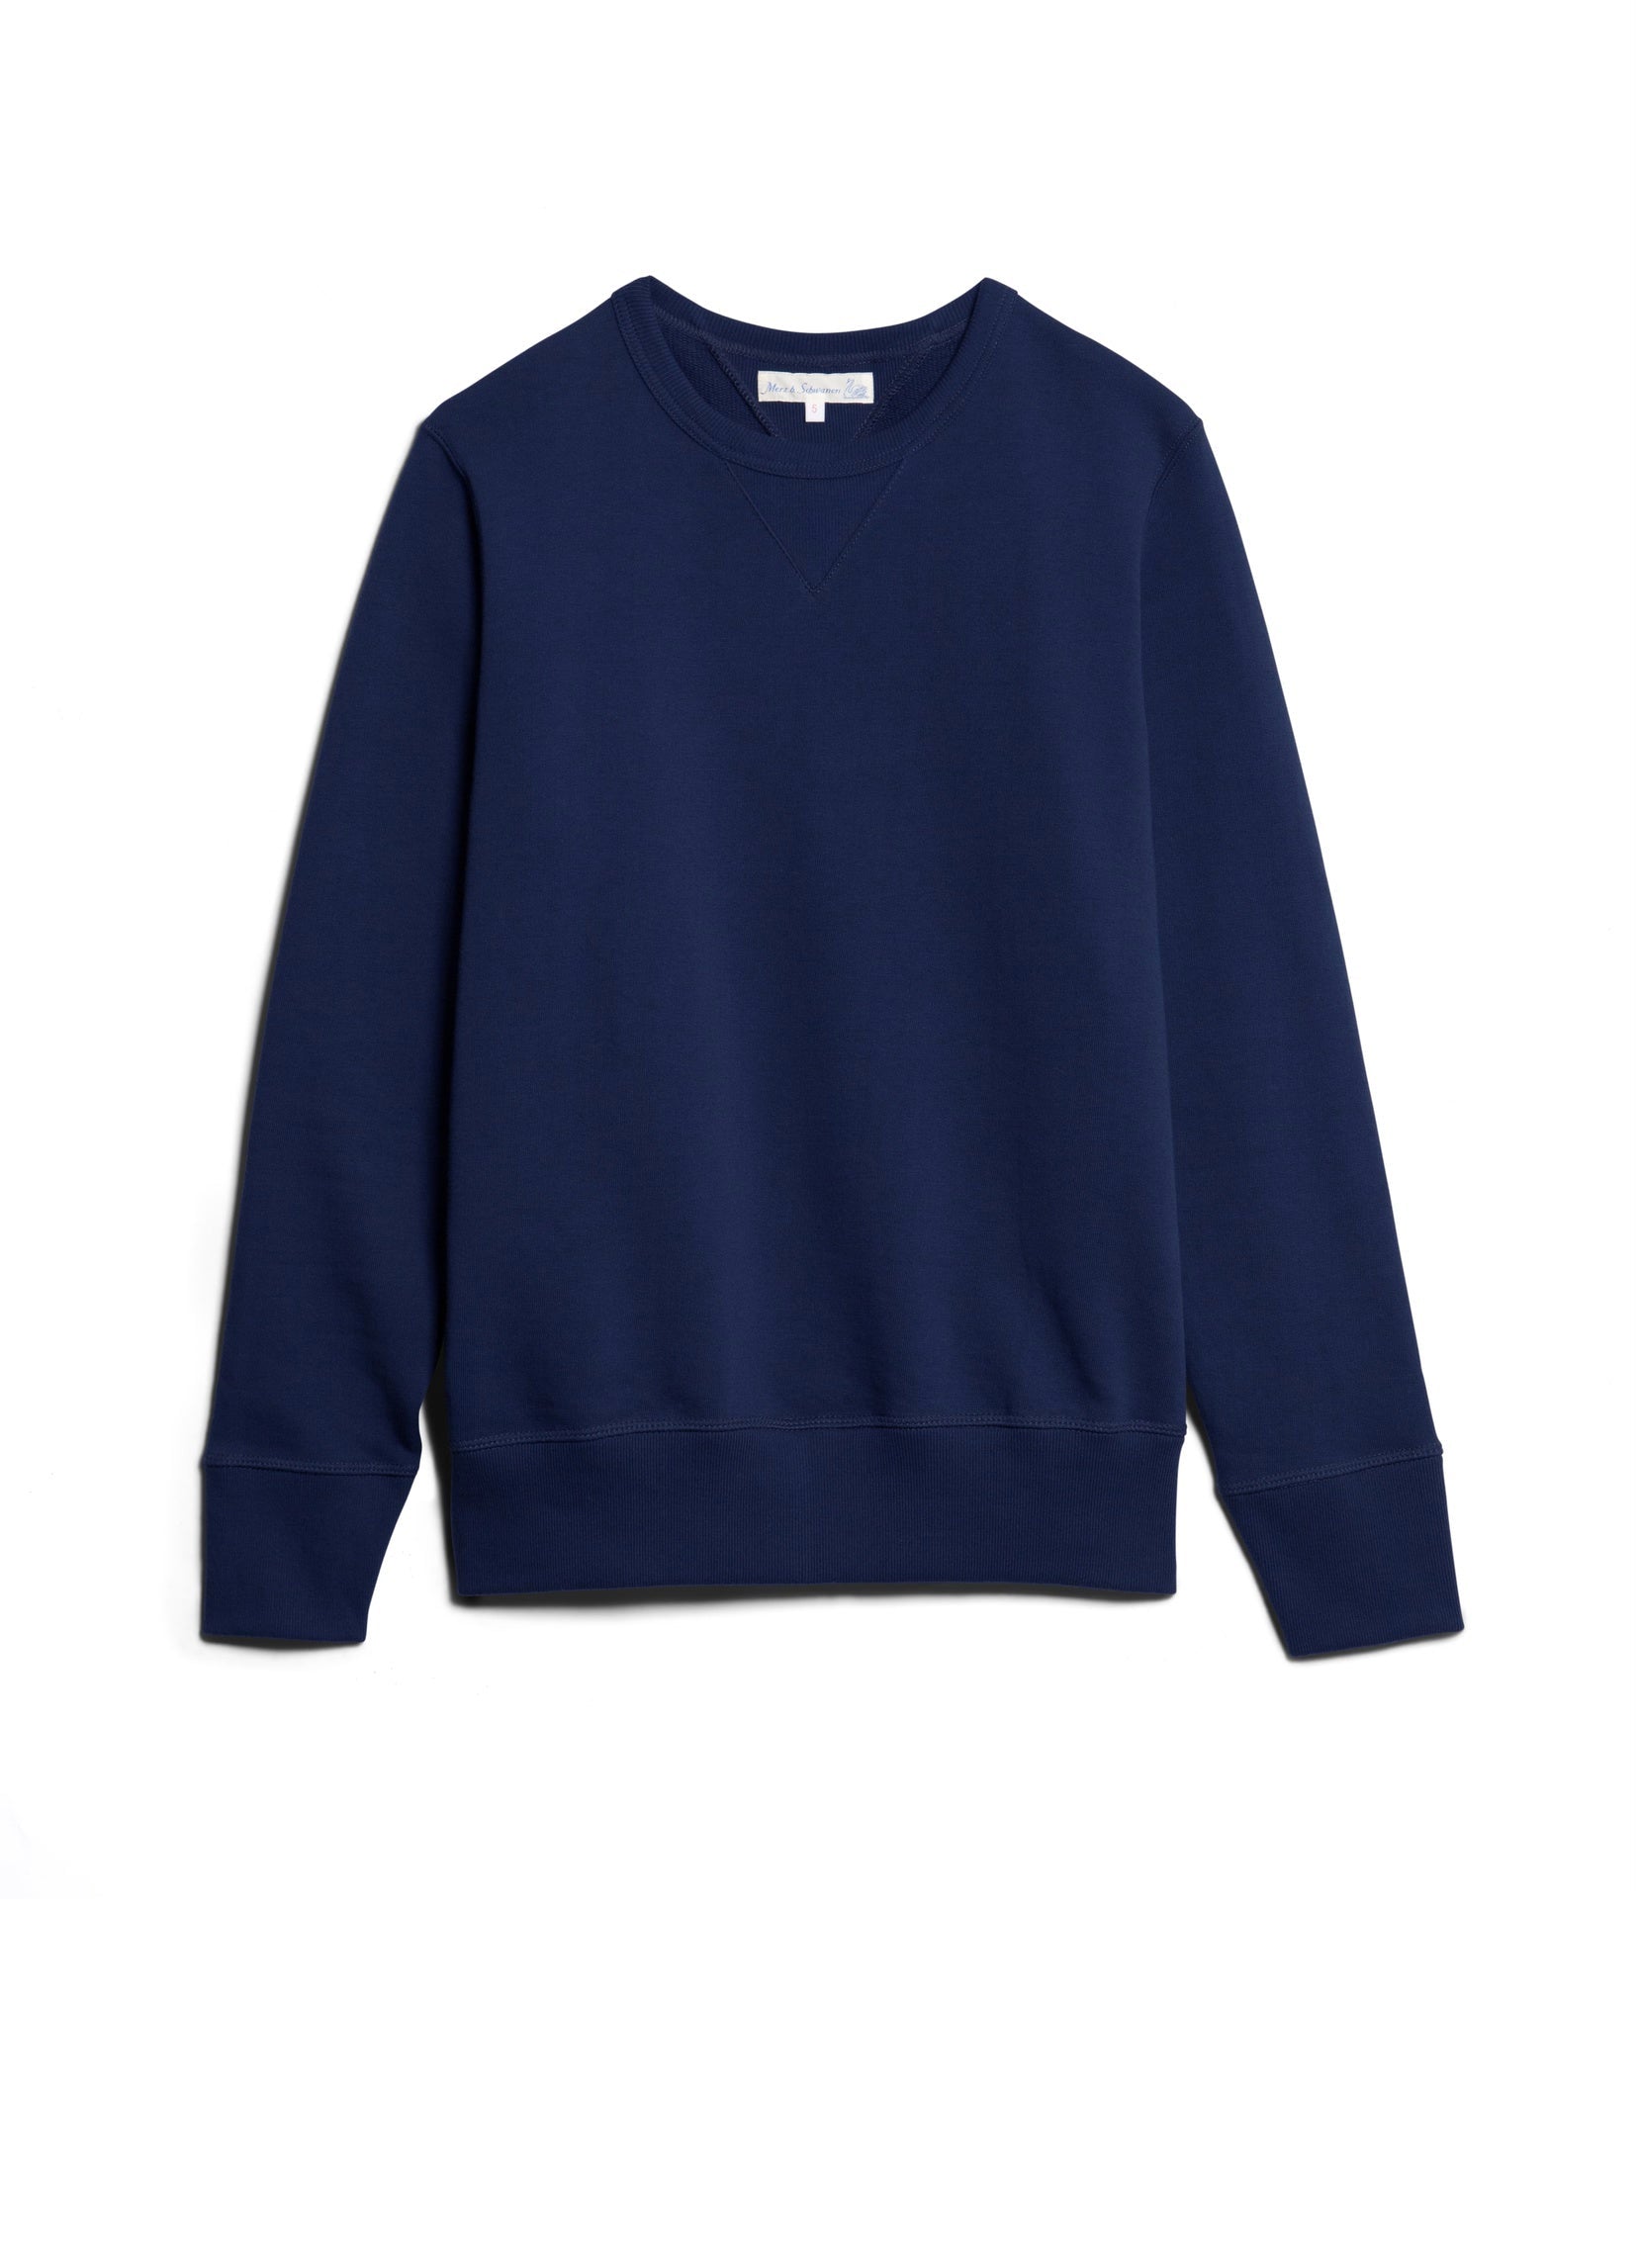 GOOD ORIGINALS | Loopwheeled Sweatshirt 12oz | Ink Blue